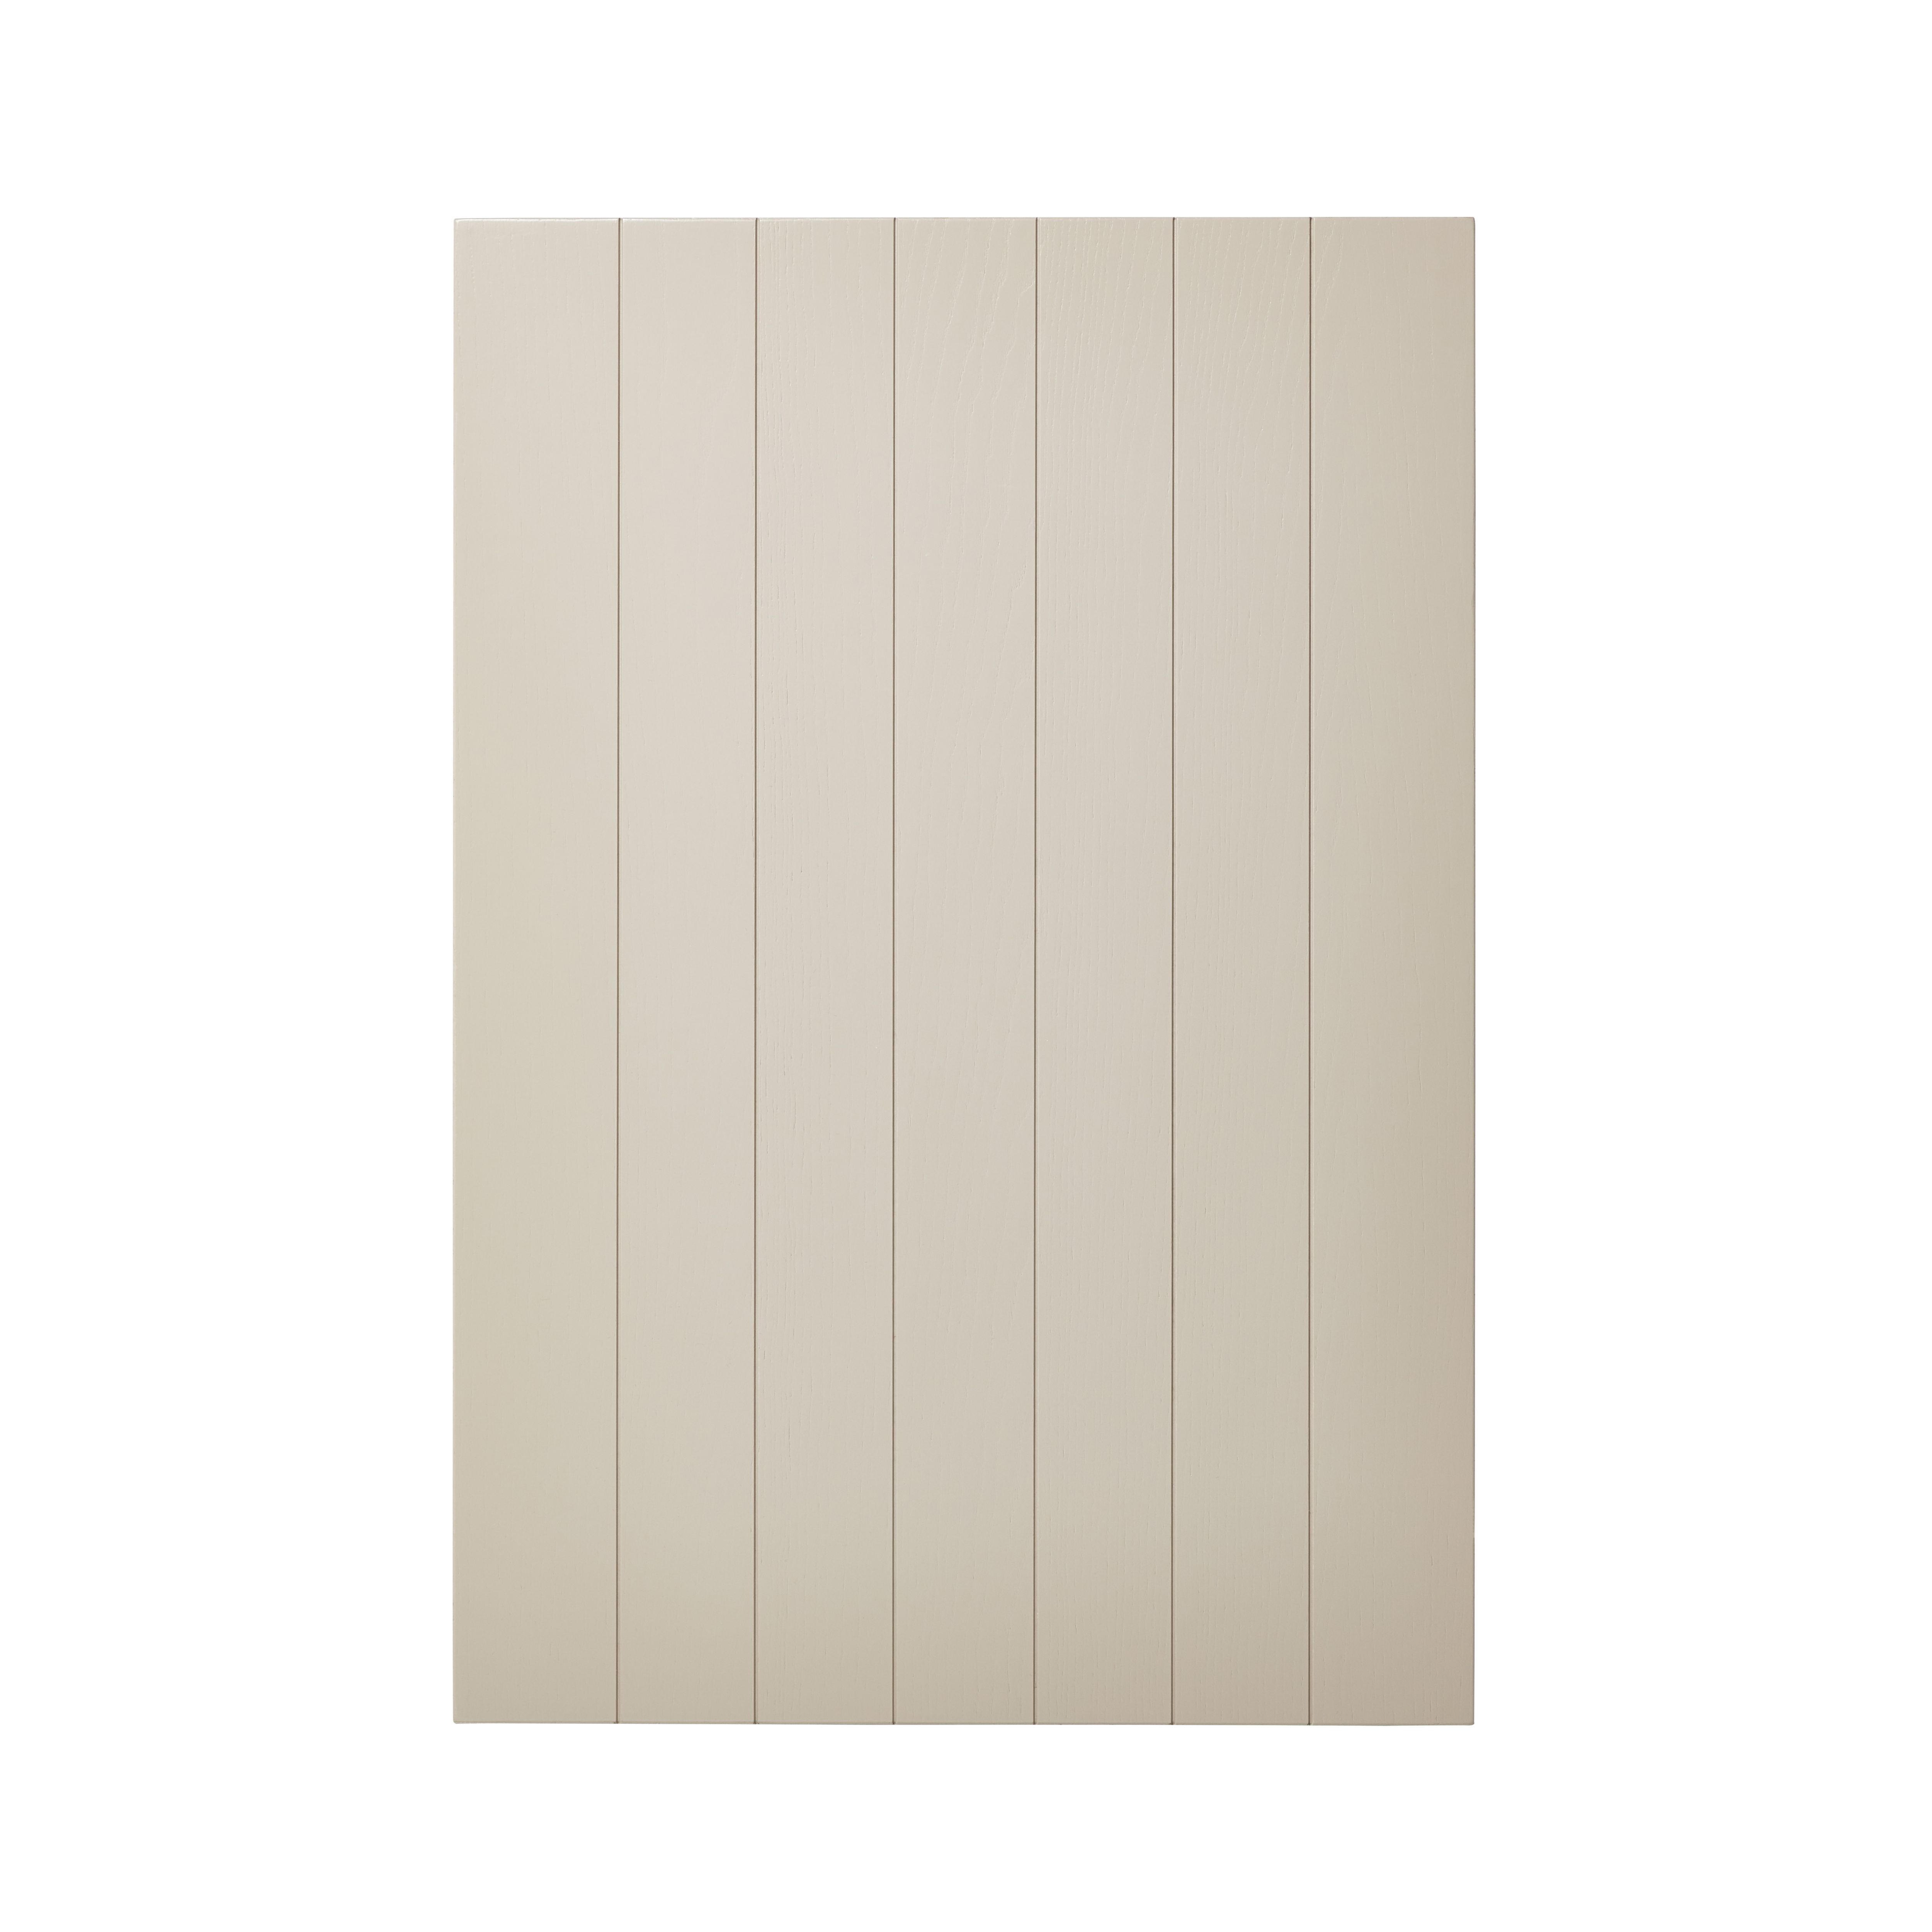 GoodHome Verbena Matt cashmere painted natural ash shaker Standard End panel (H)870mm (W)590mm